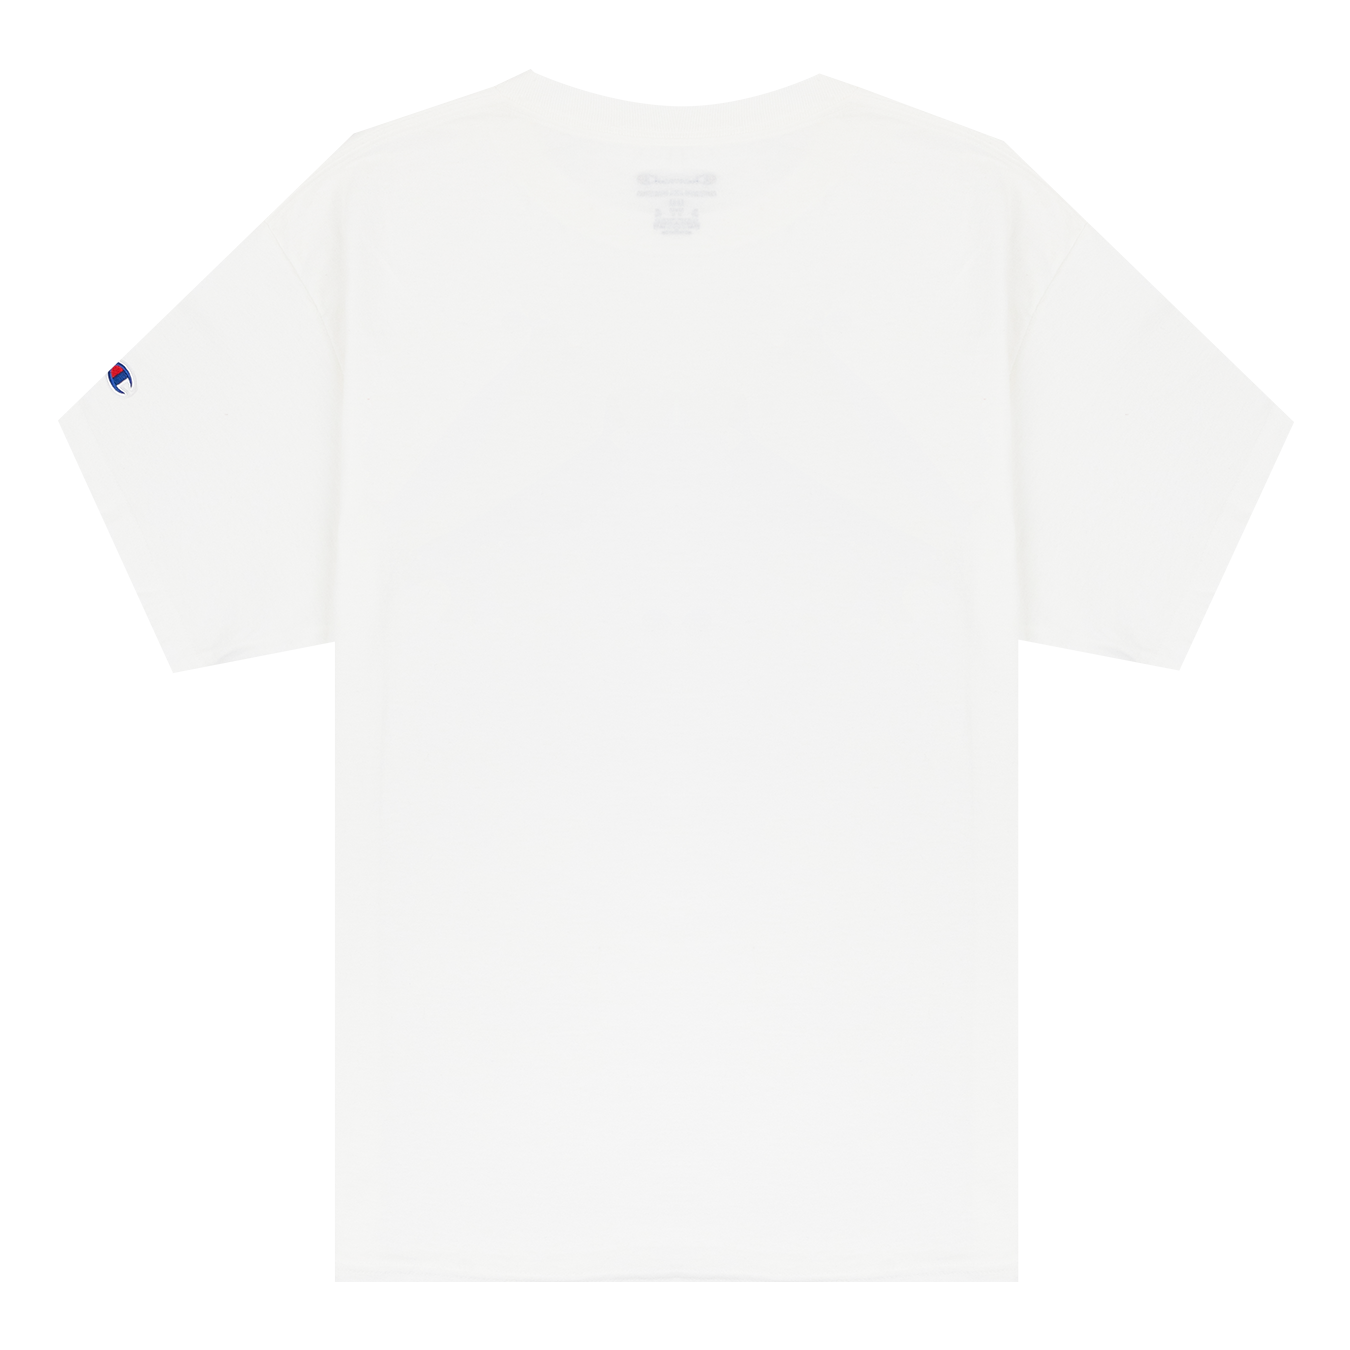 Texas A&M 2024 Softball Regionals T-Shirt